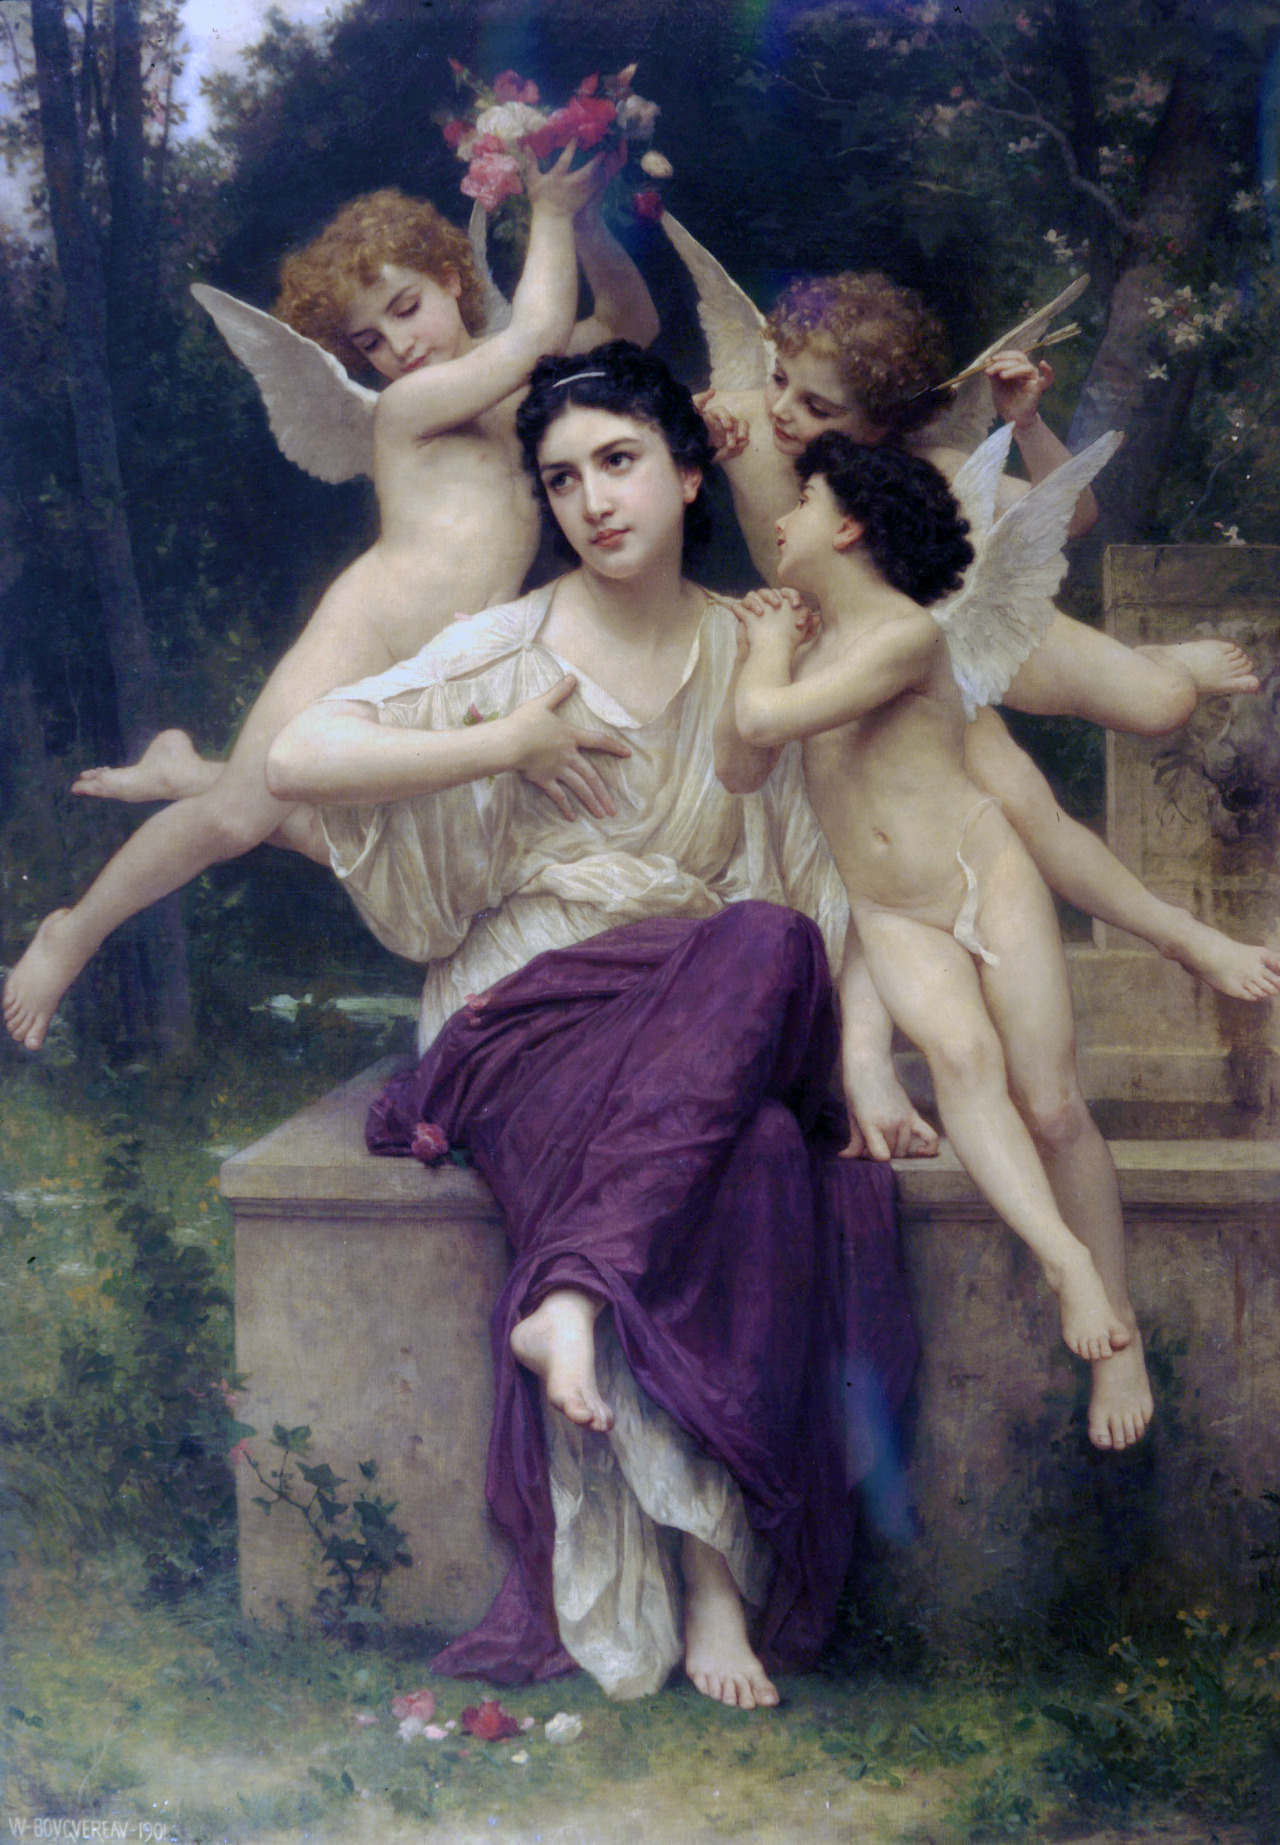  Rêve de Printemps (Dream of Spring) by William-Adolphe Bouguereau (1825-1905) oil